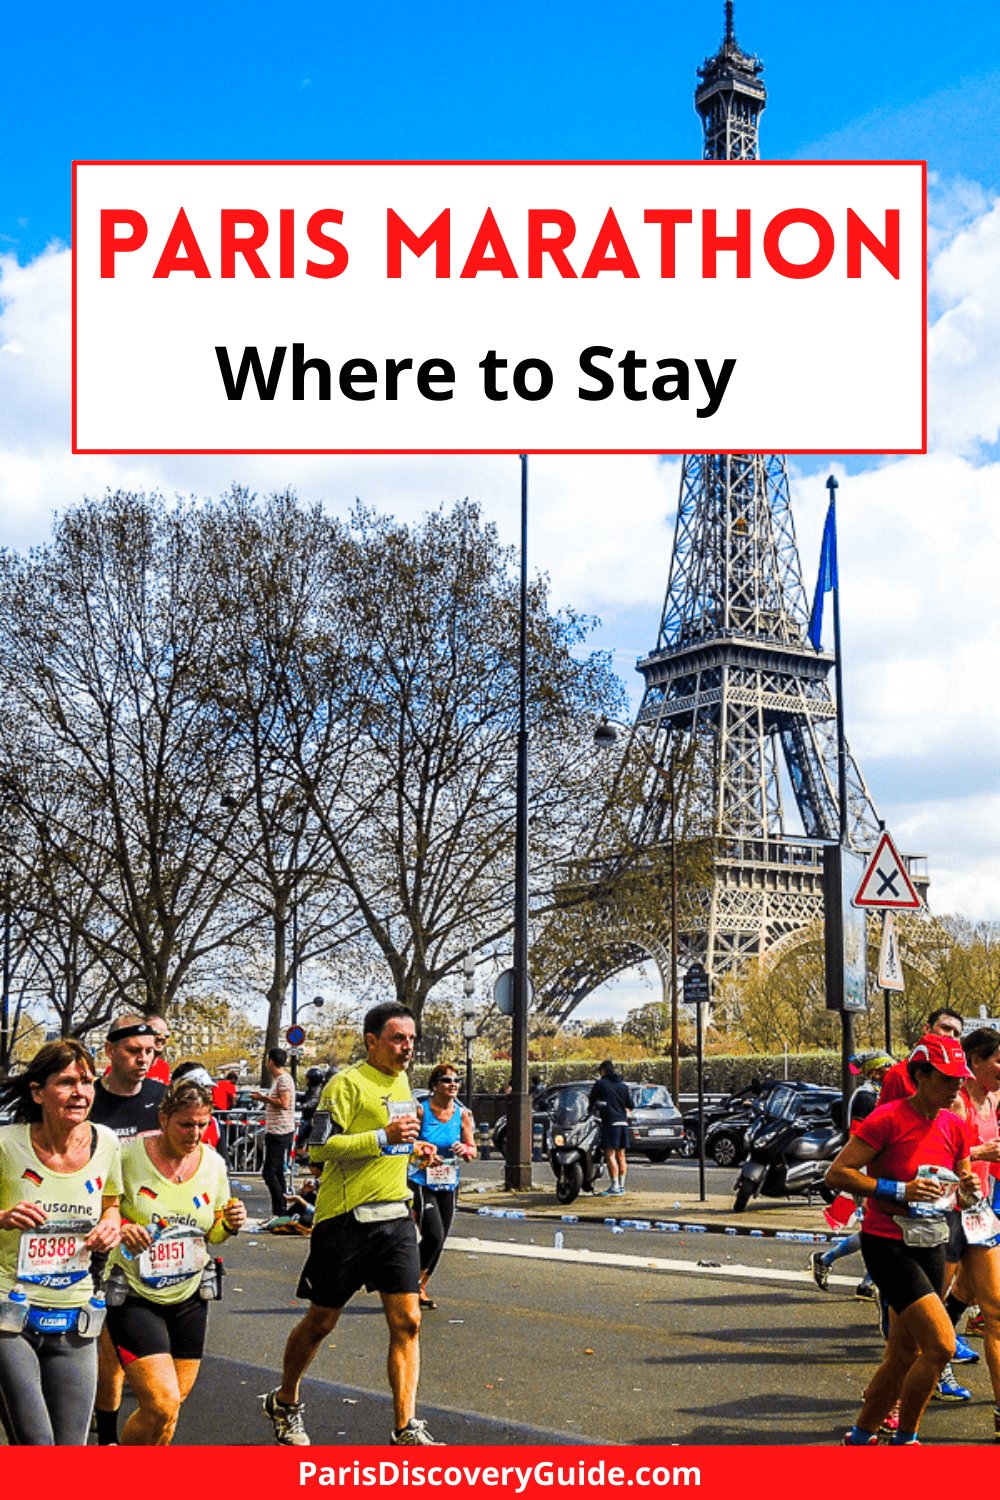 Paris Marathon runners passing the Eiffel Tower